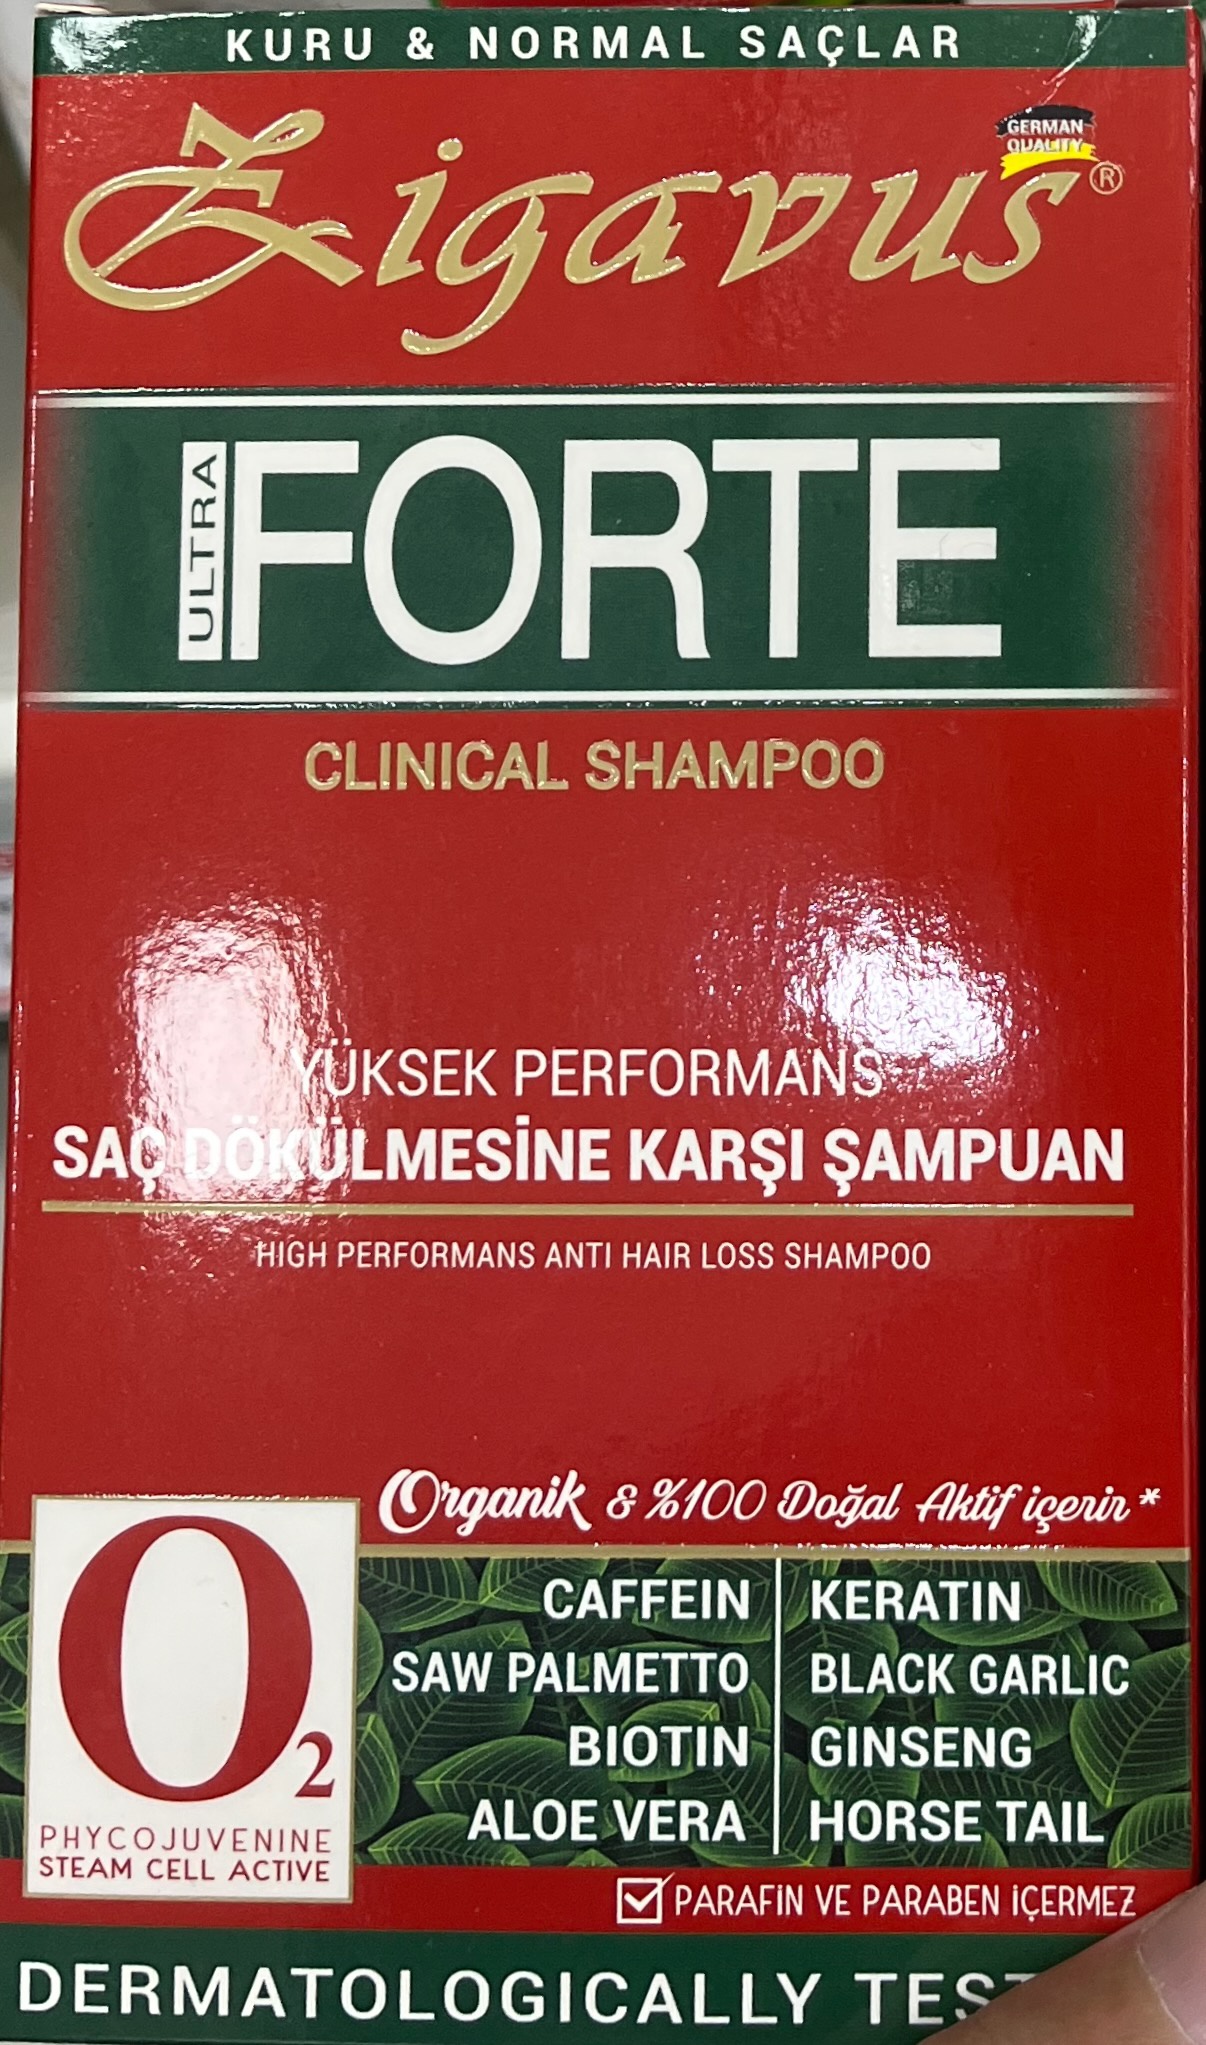 Zigavus Ultra Forte Clinical Shampoo